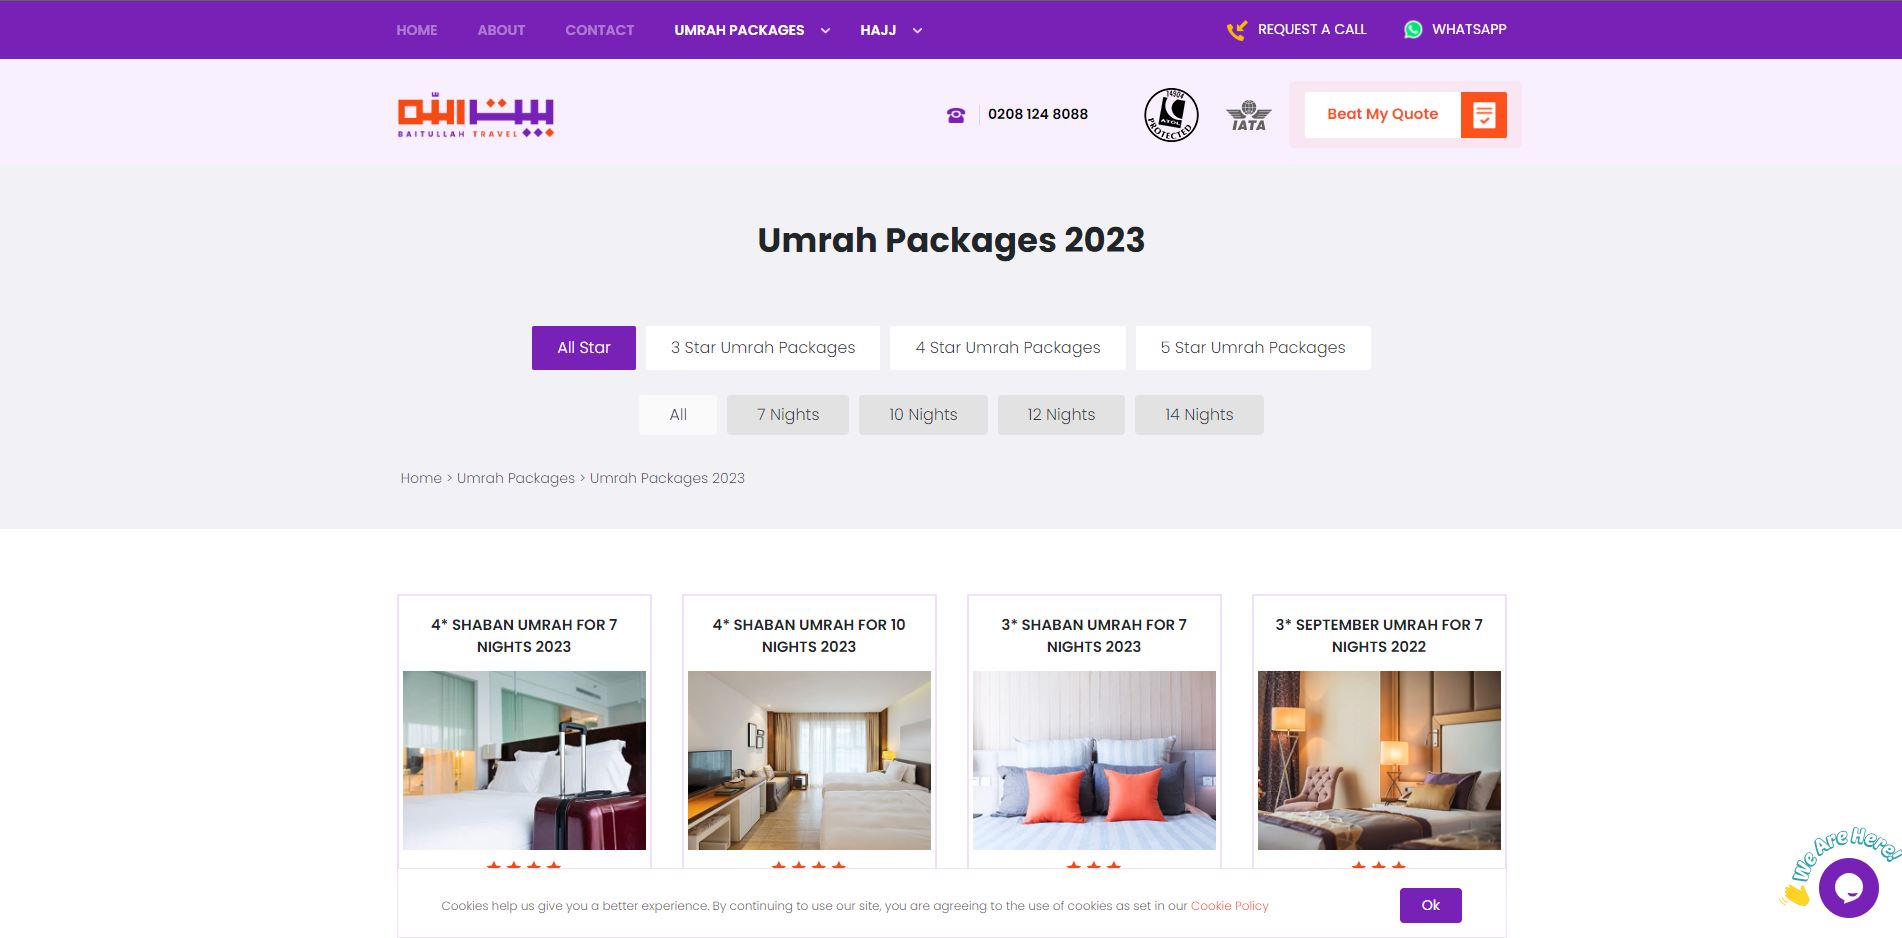 Umrah Packages 2023